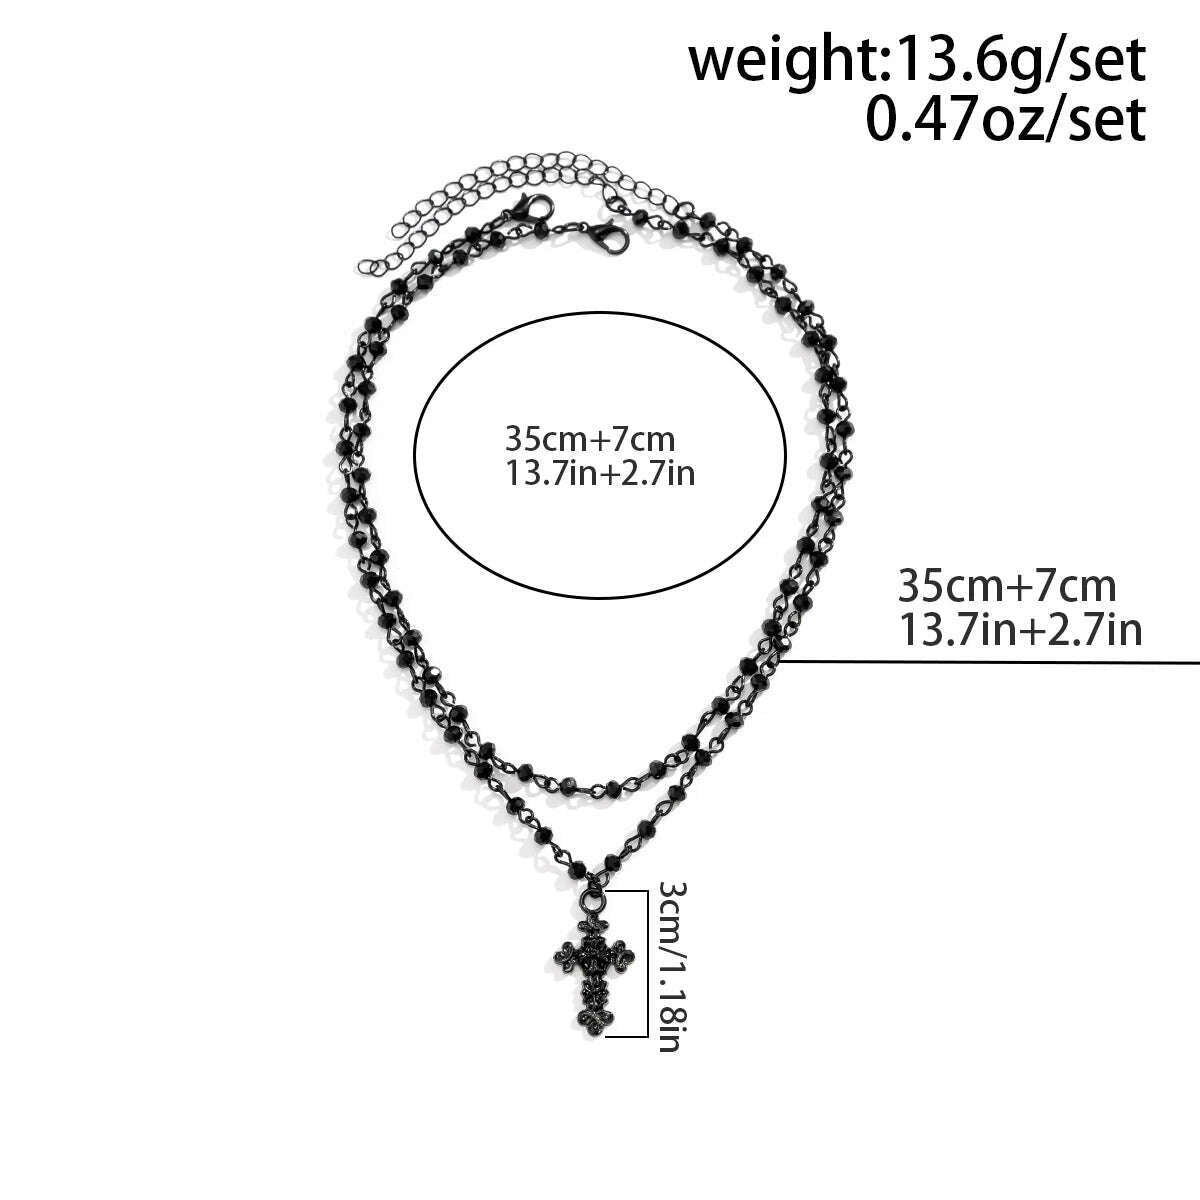 KIMLUD, Ingemark Gothic Black Cross Jesus Star Pendant Choker Necklace for Women Punk Vintage Metal Chain Neck Jewelry Accessories New, KIMLUD Womens Clothes